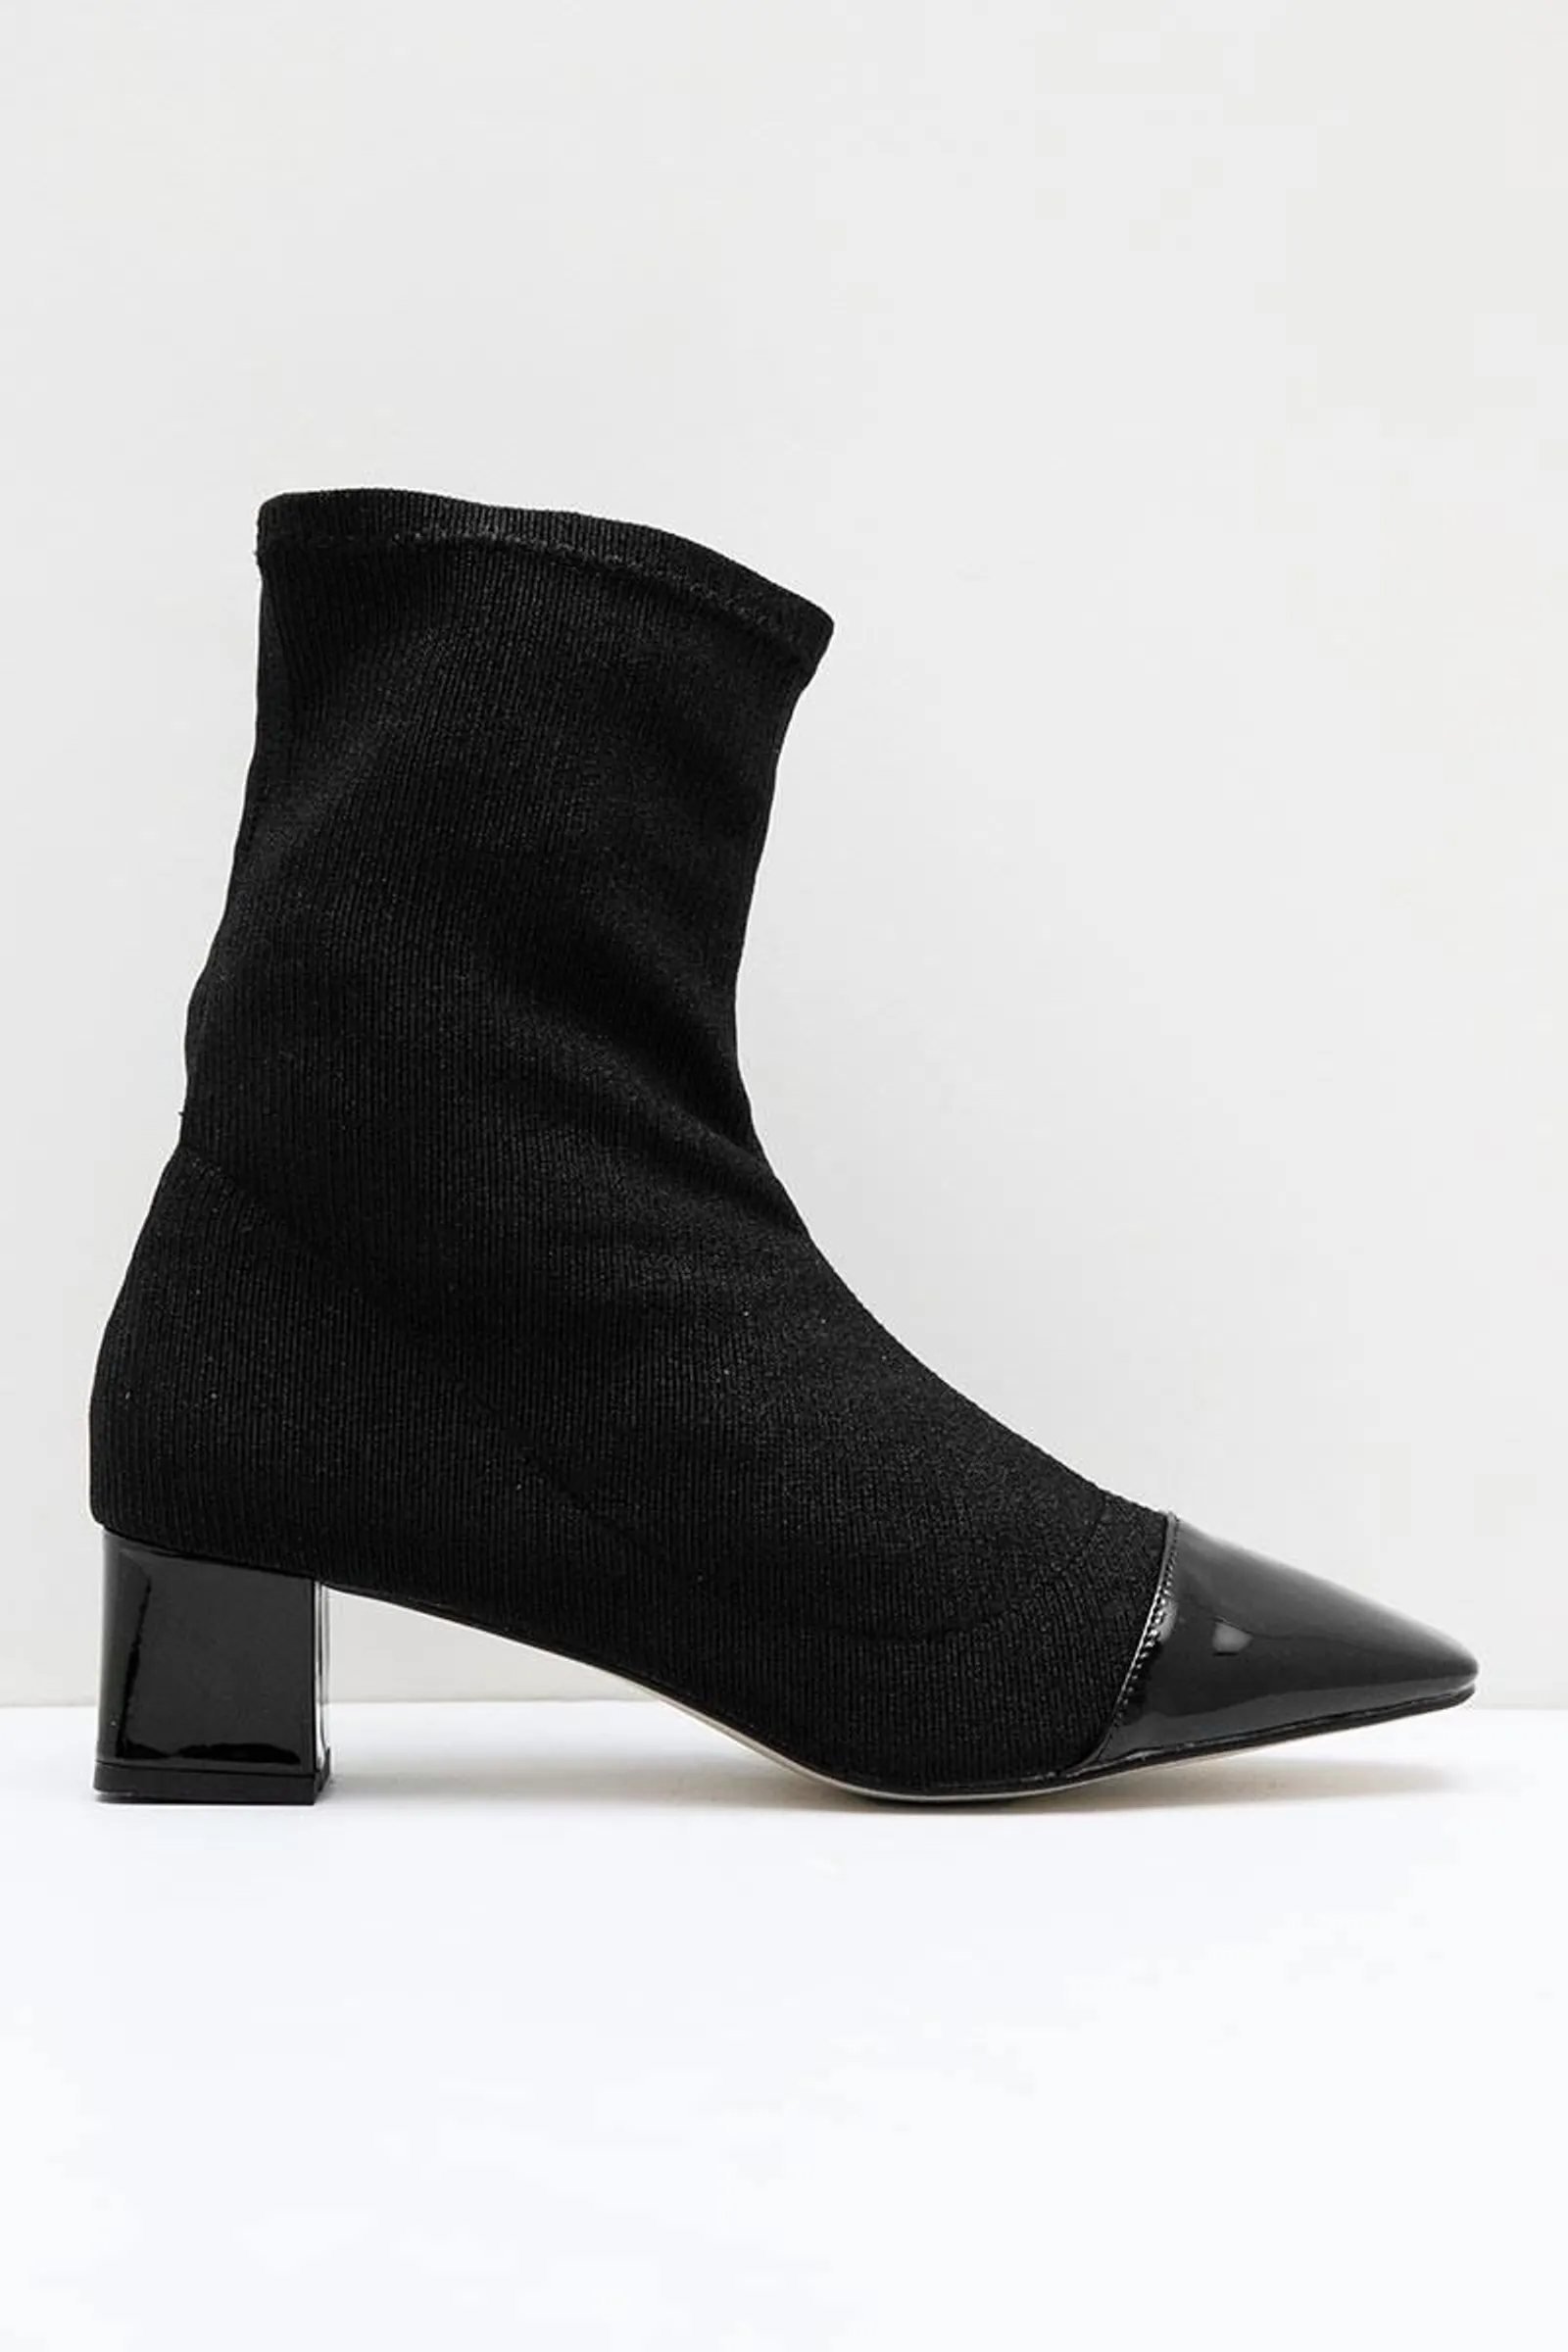 #PopbelaOOTD: Intip Sepatu Boots Buatan Brand Lokal